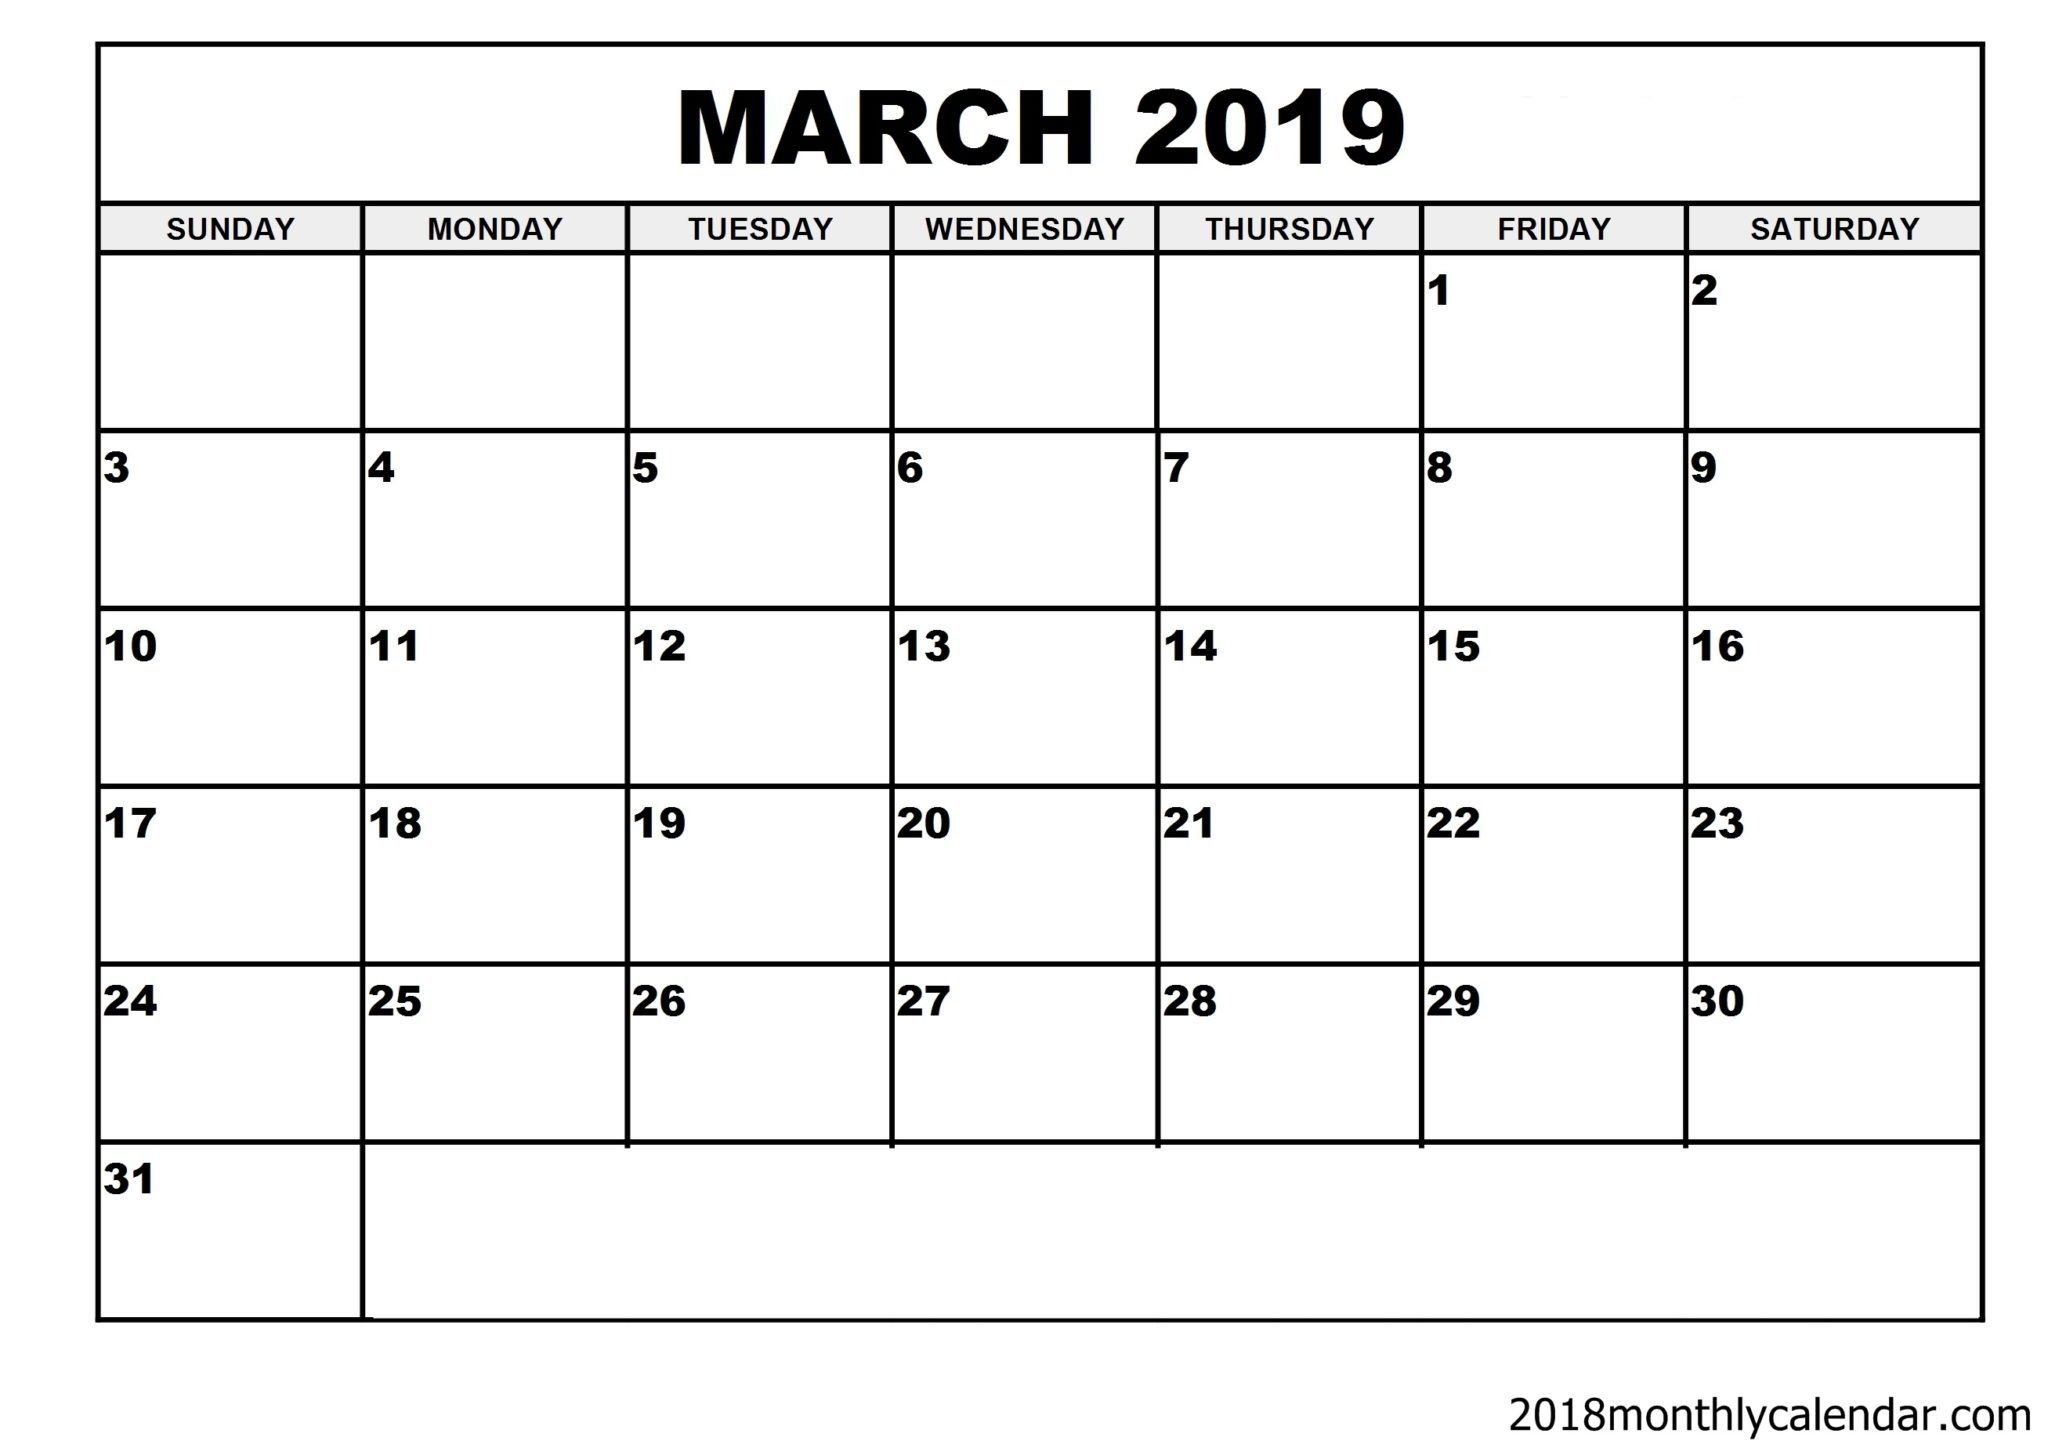 Download March 2019 Calendar – Blank Template - Editable